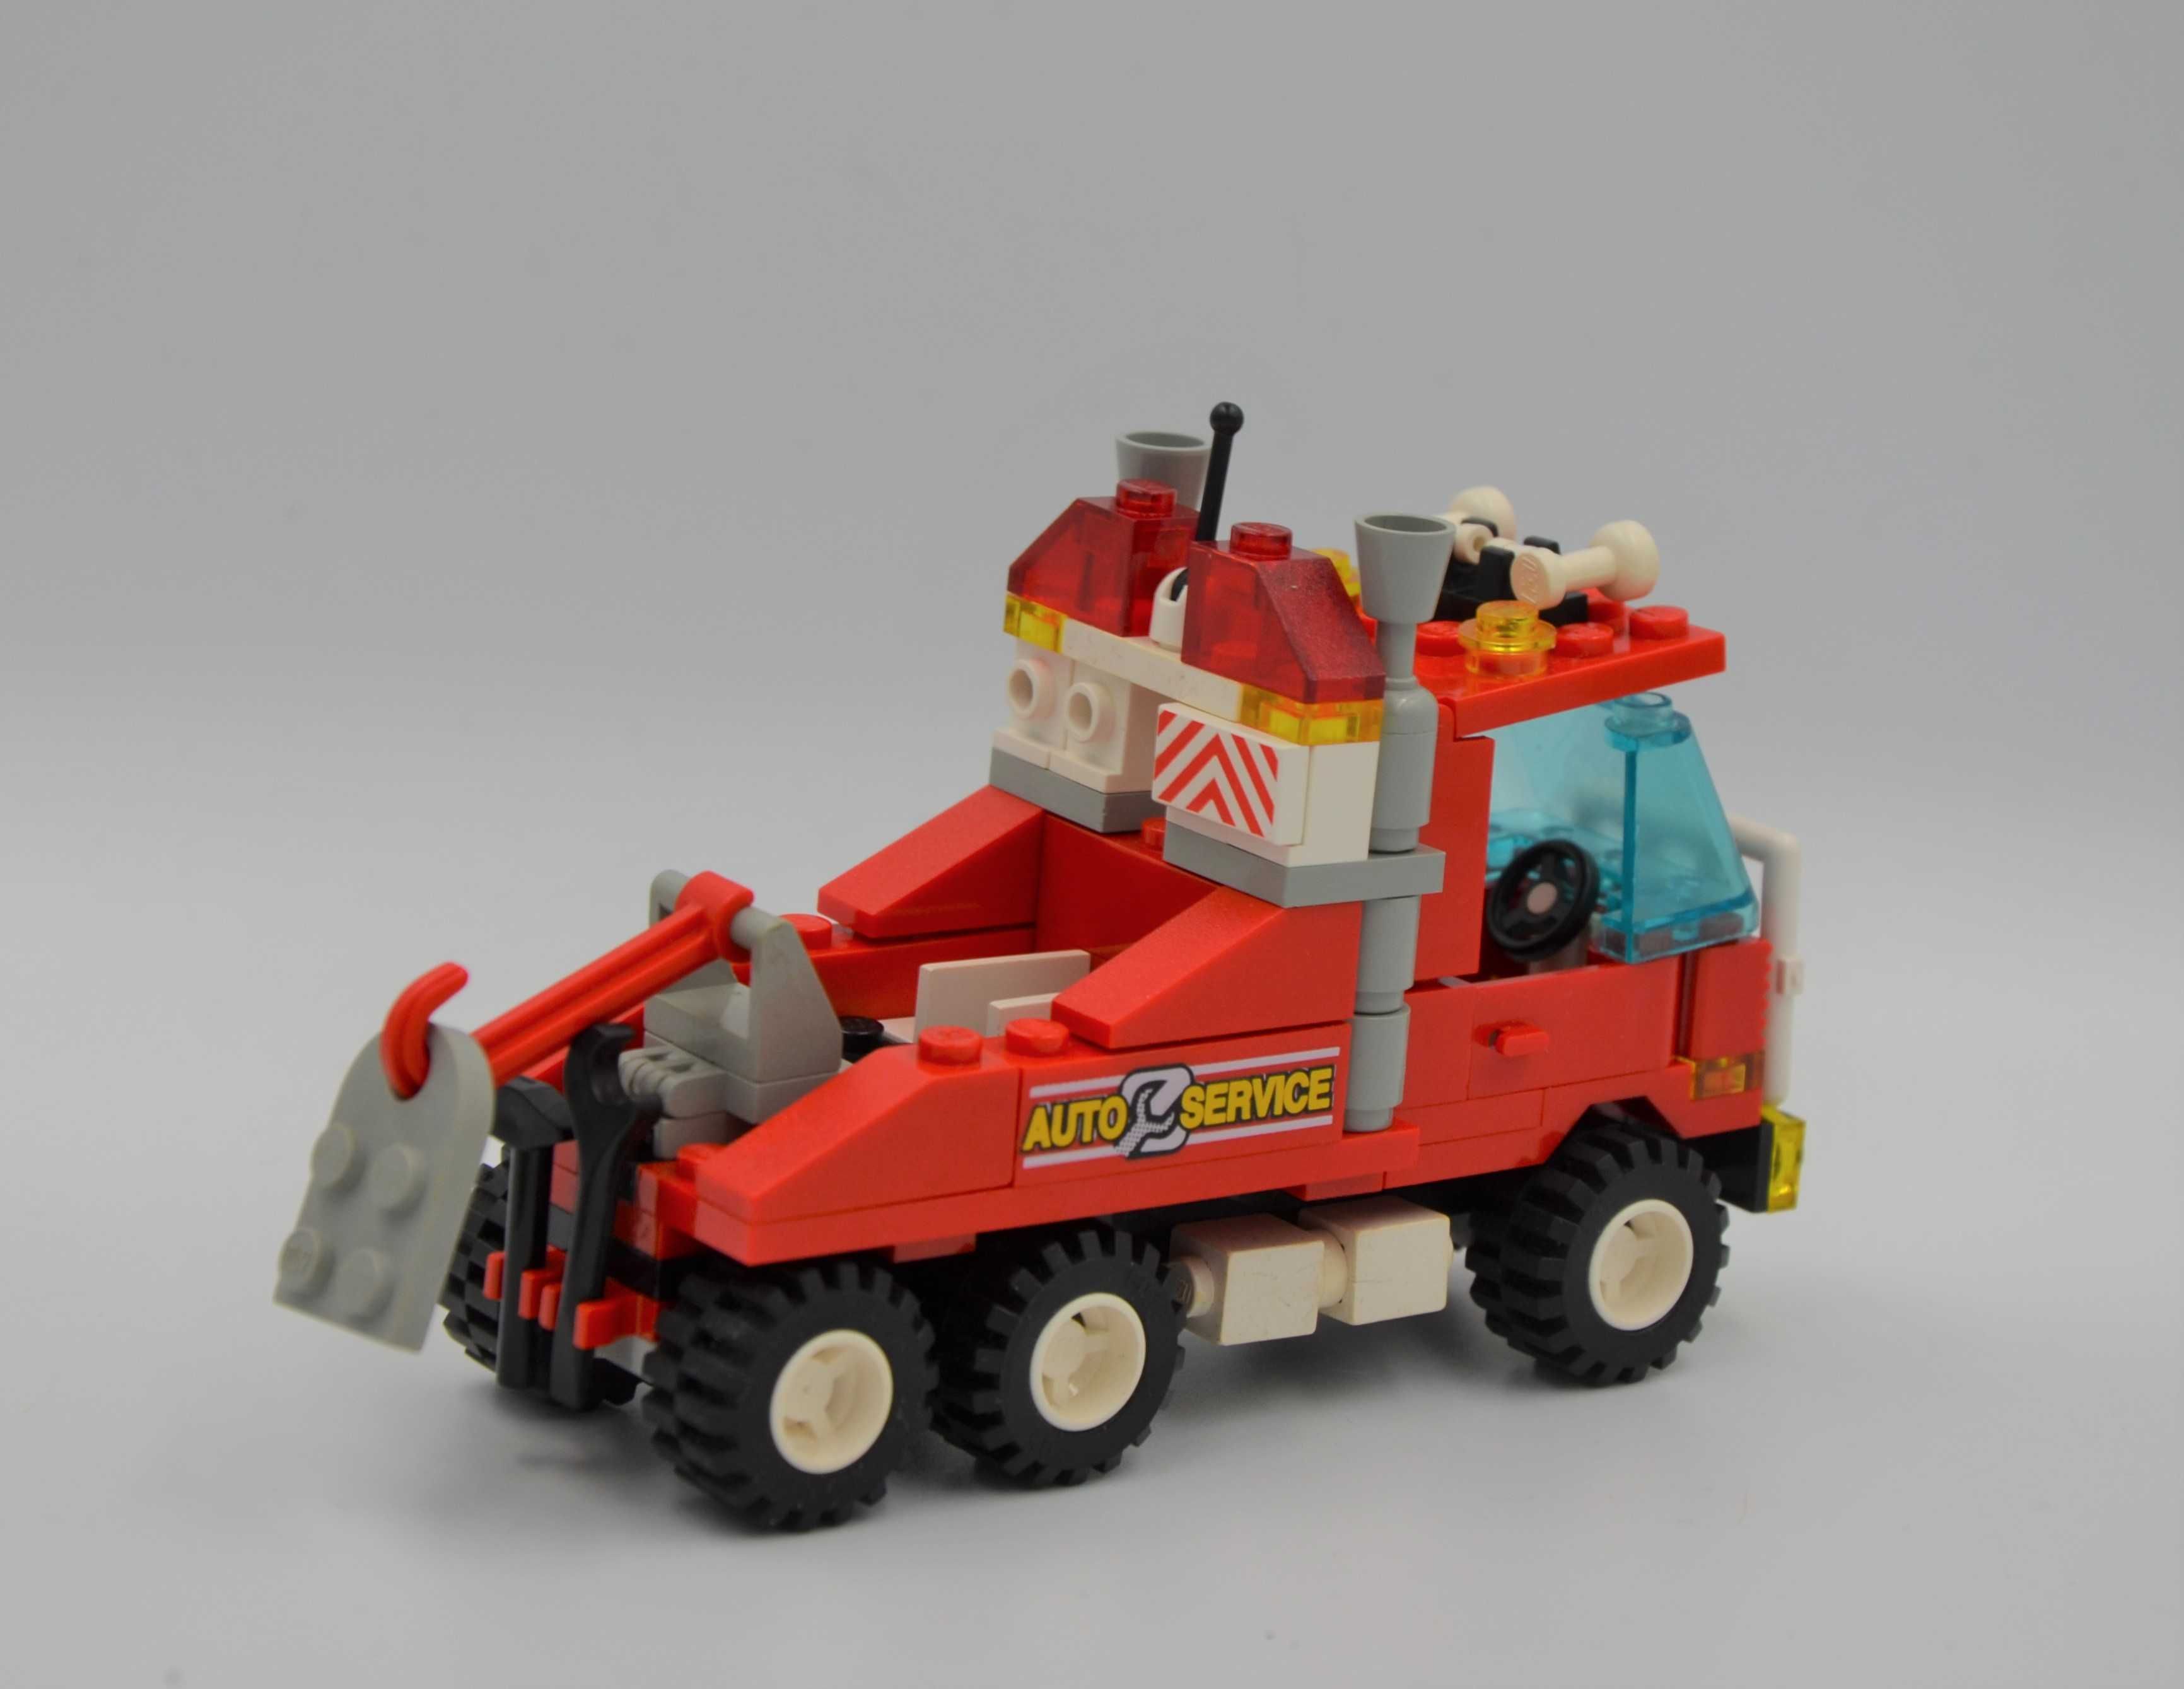 LEGO 6670 - Rescue Rig